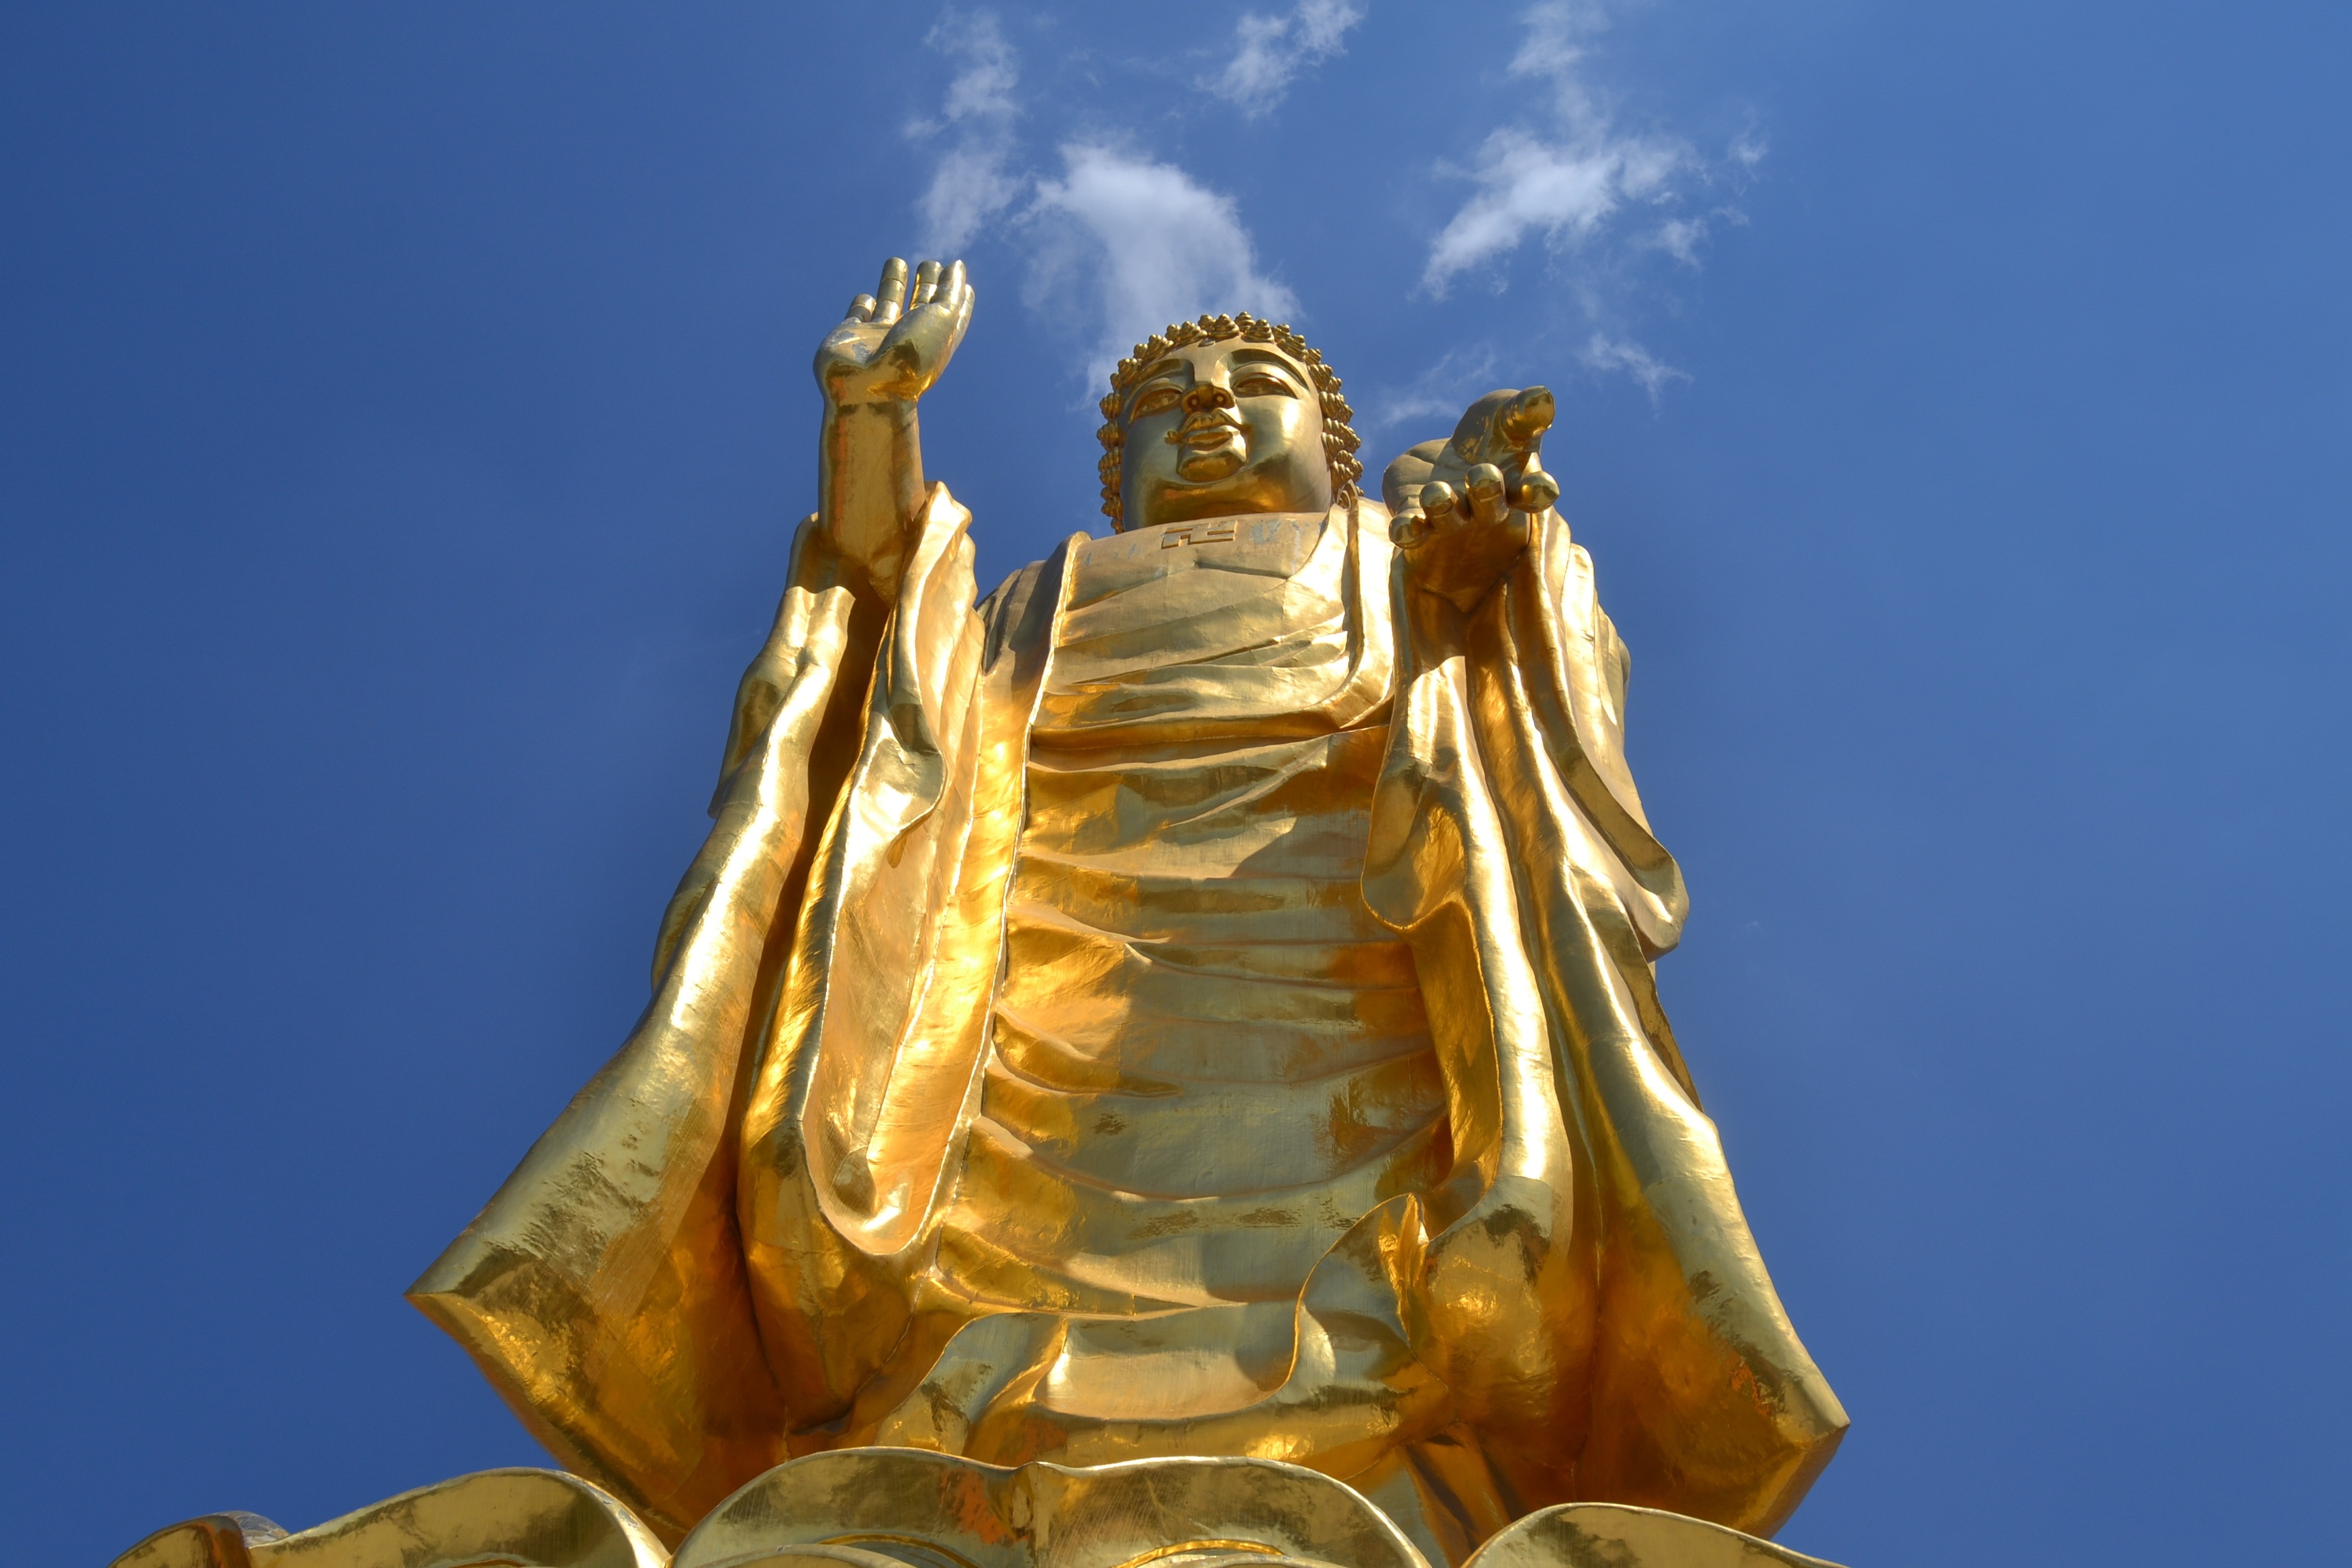 Red Mountain, Urumqi, Buddha Statues, gold colored, statue